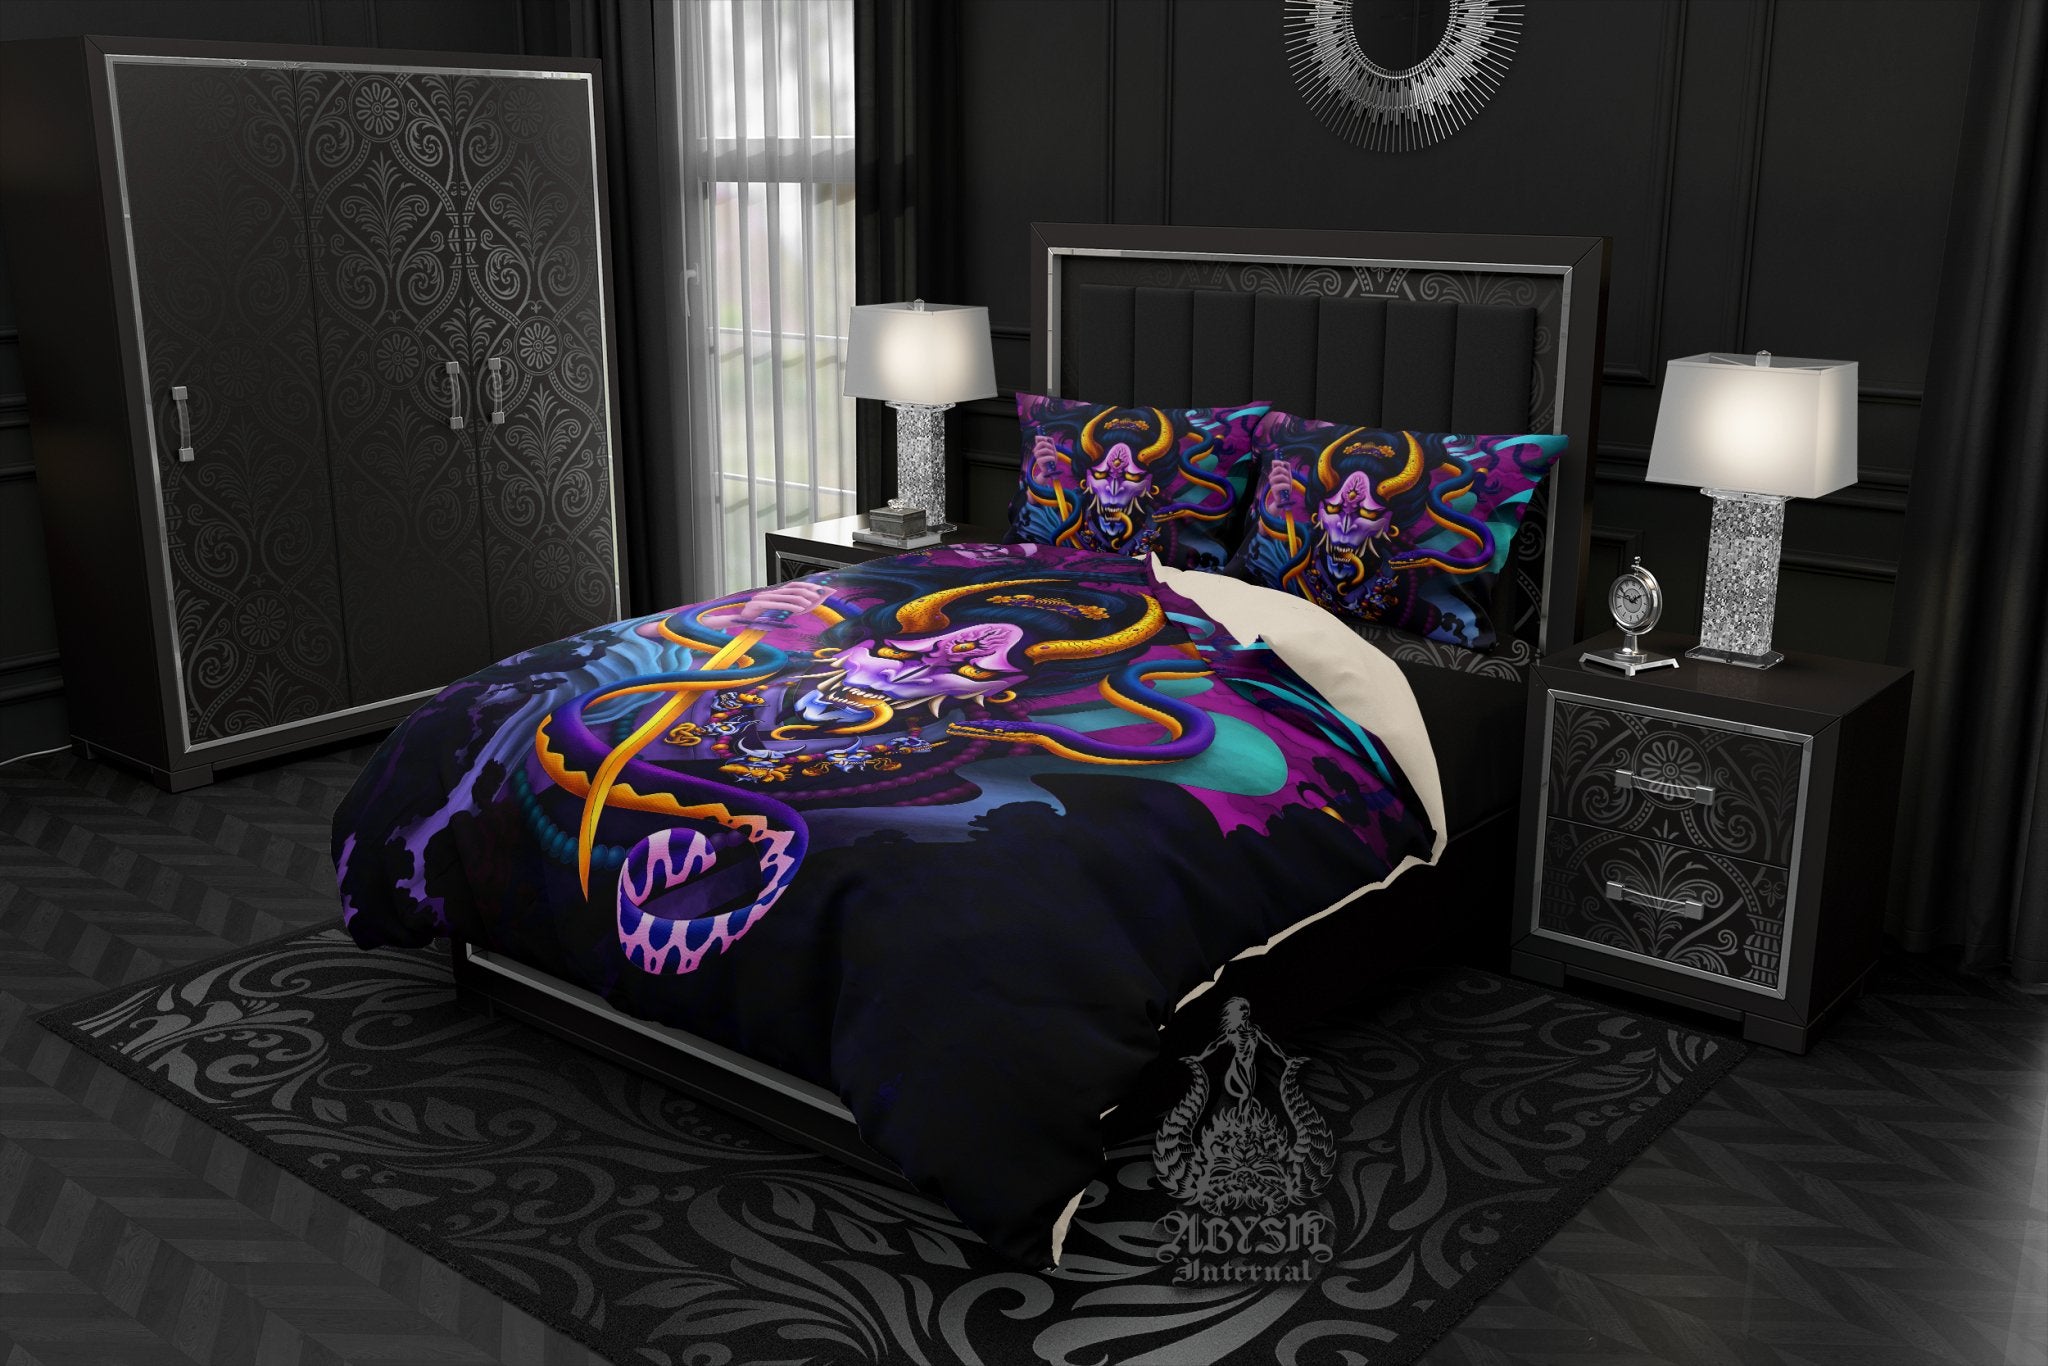 Trippy Bedding Set, Comforter or Duvet, Pastel Black Bed Cover, Japanese Demon Bedroom Decor, King, Queen & Twin Size - Snake and Hannya - Abysm Internal